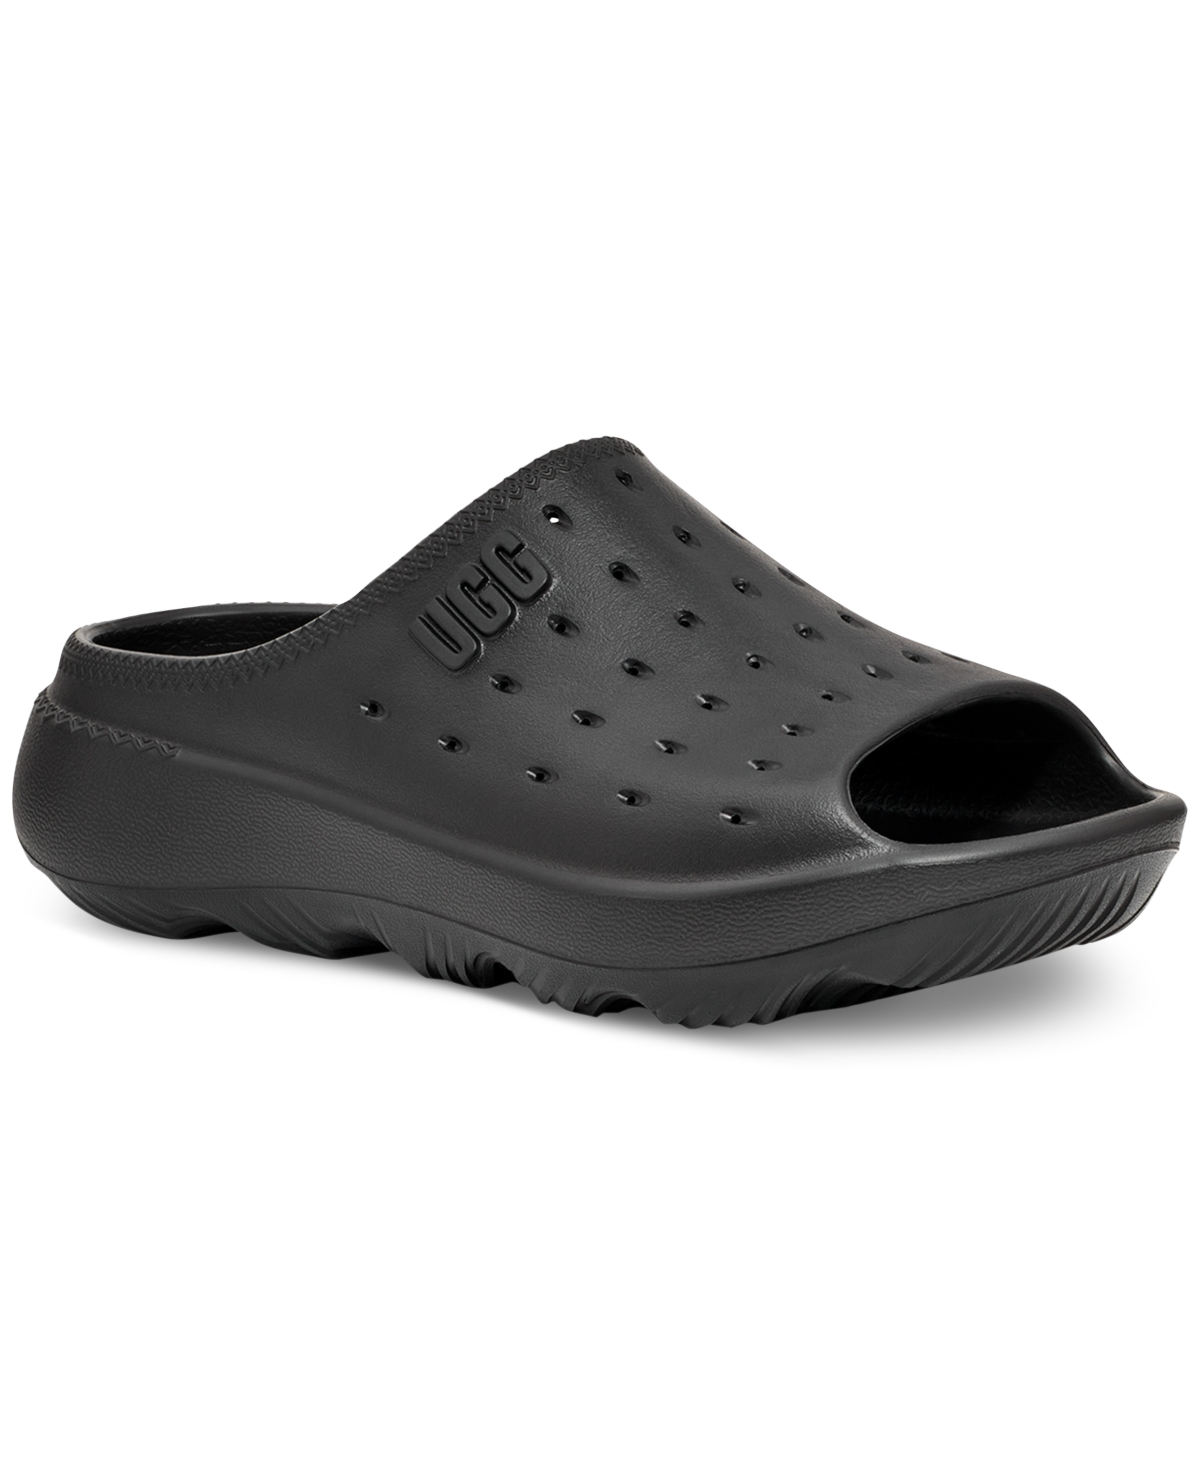 Men's Slide It Perforated Sandal - Black